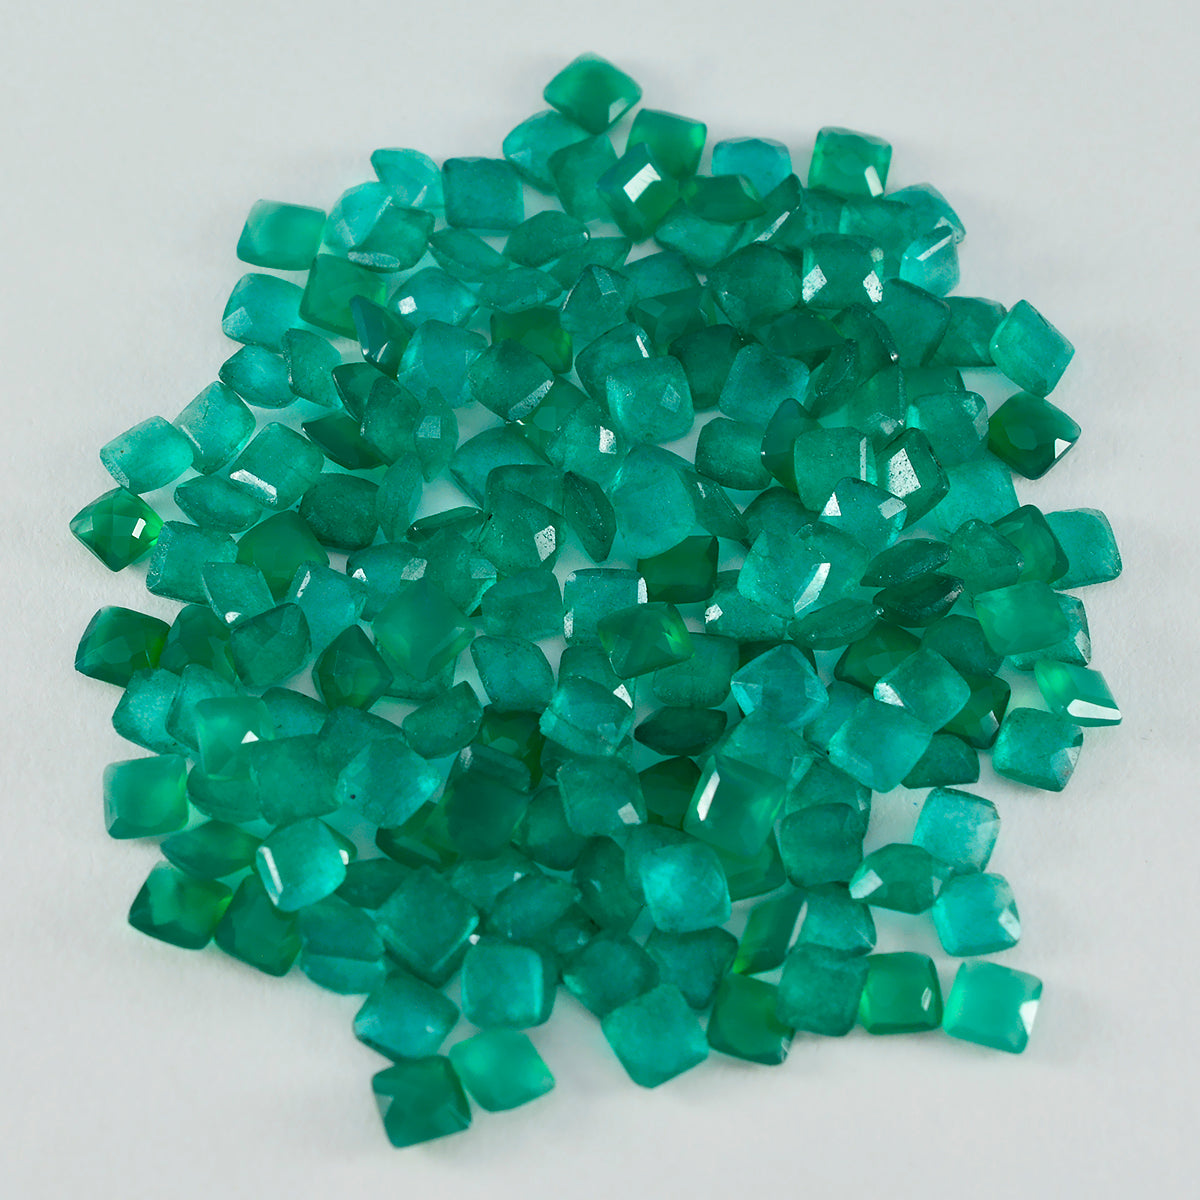 riyogems 1 шт., настоящая зеленая яшма, граненая 4x4 мм, квадратная форма, драгоценный камень потрясающего качества, свободный драгоценный камень